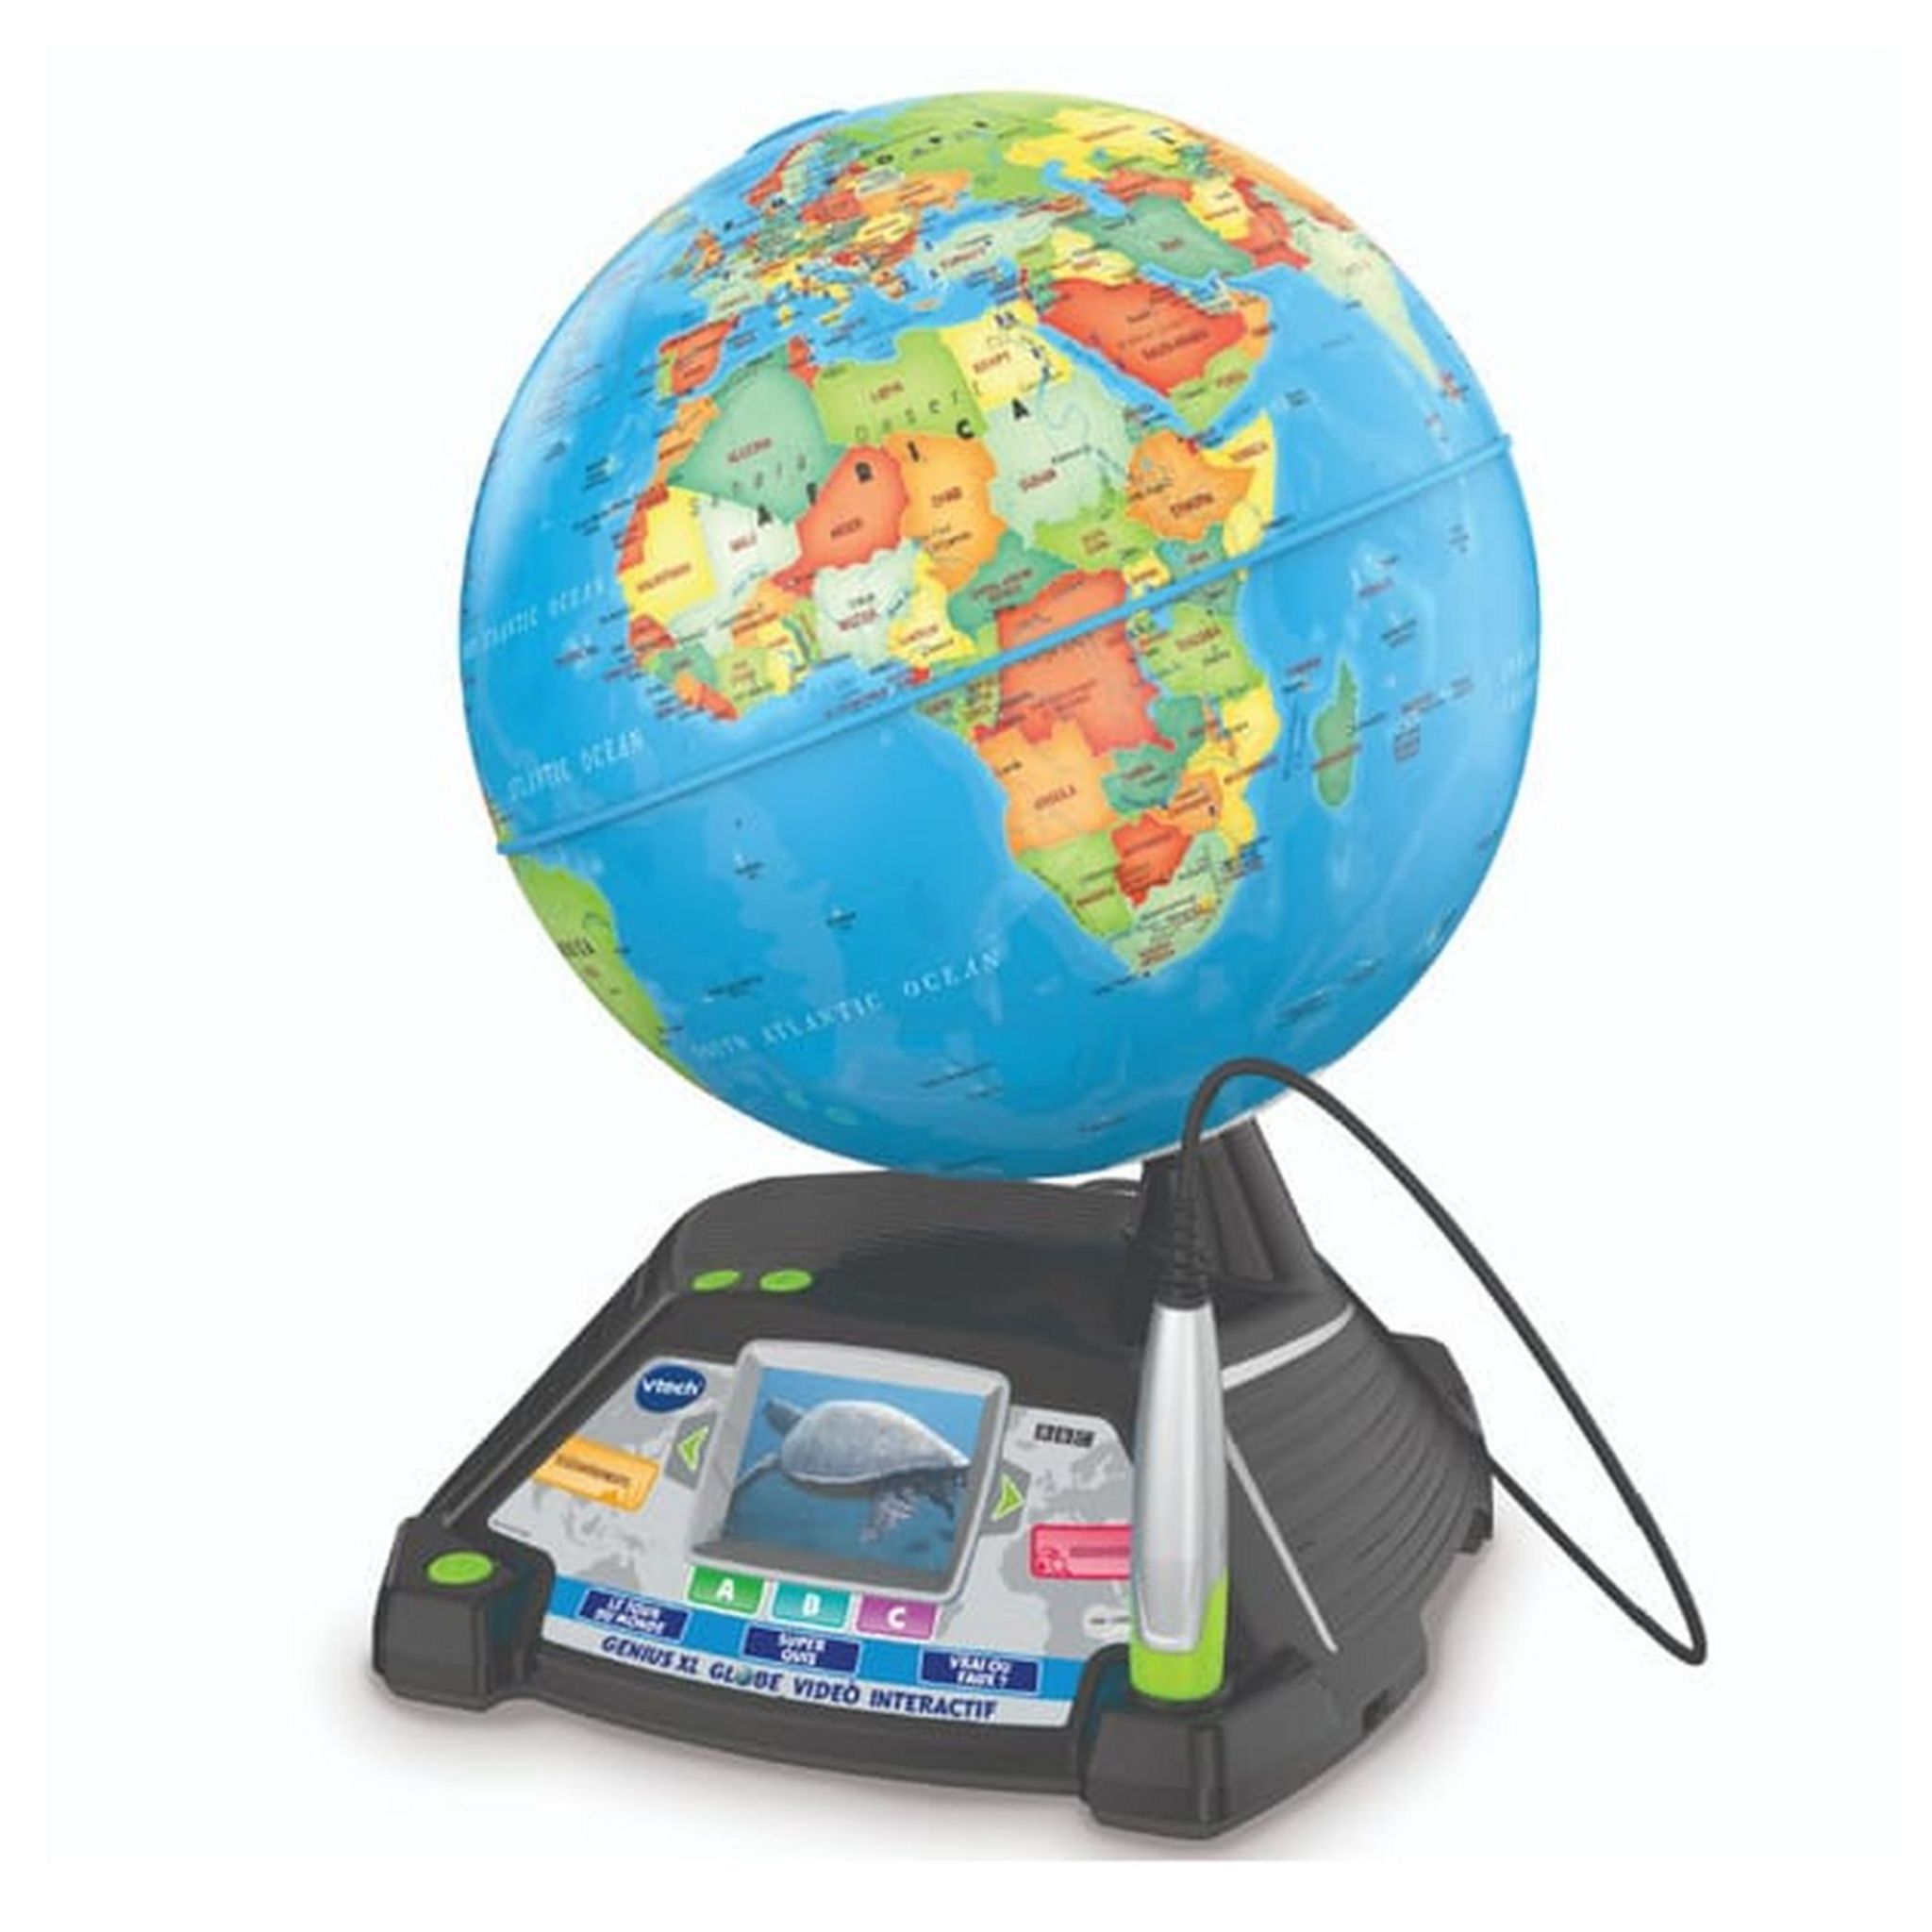 Premier globe interactif - Jeux éducatifs